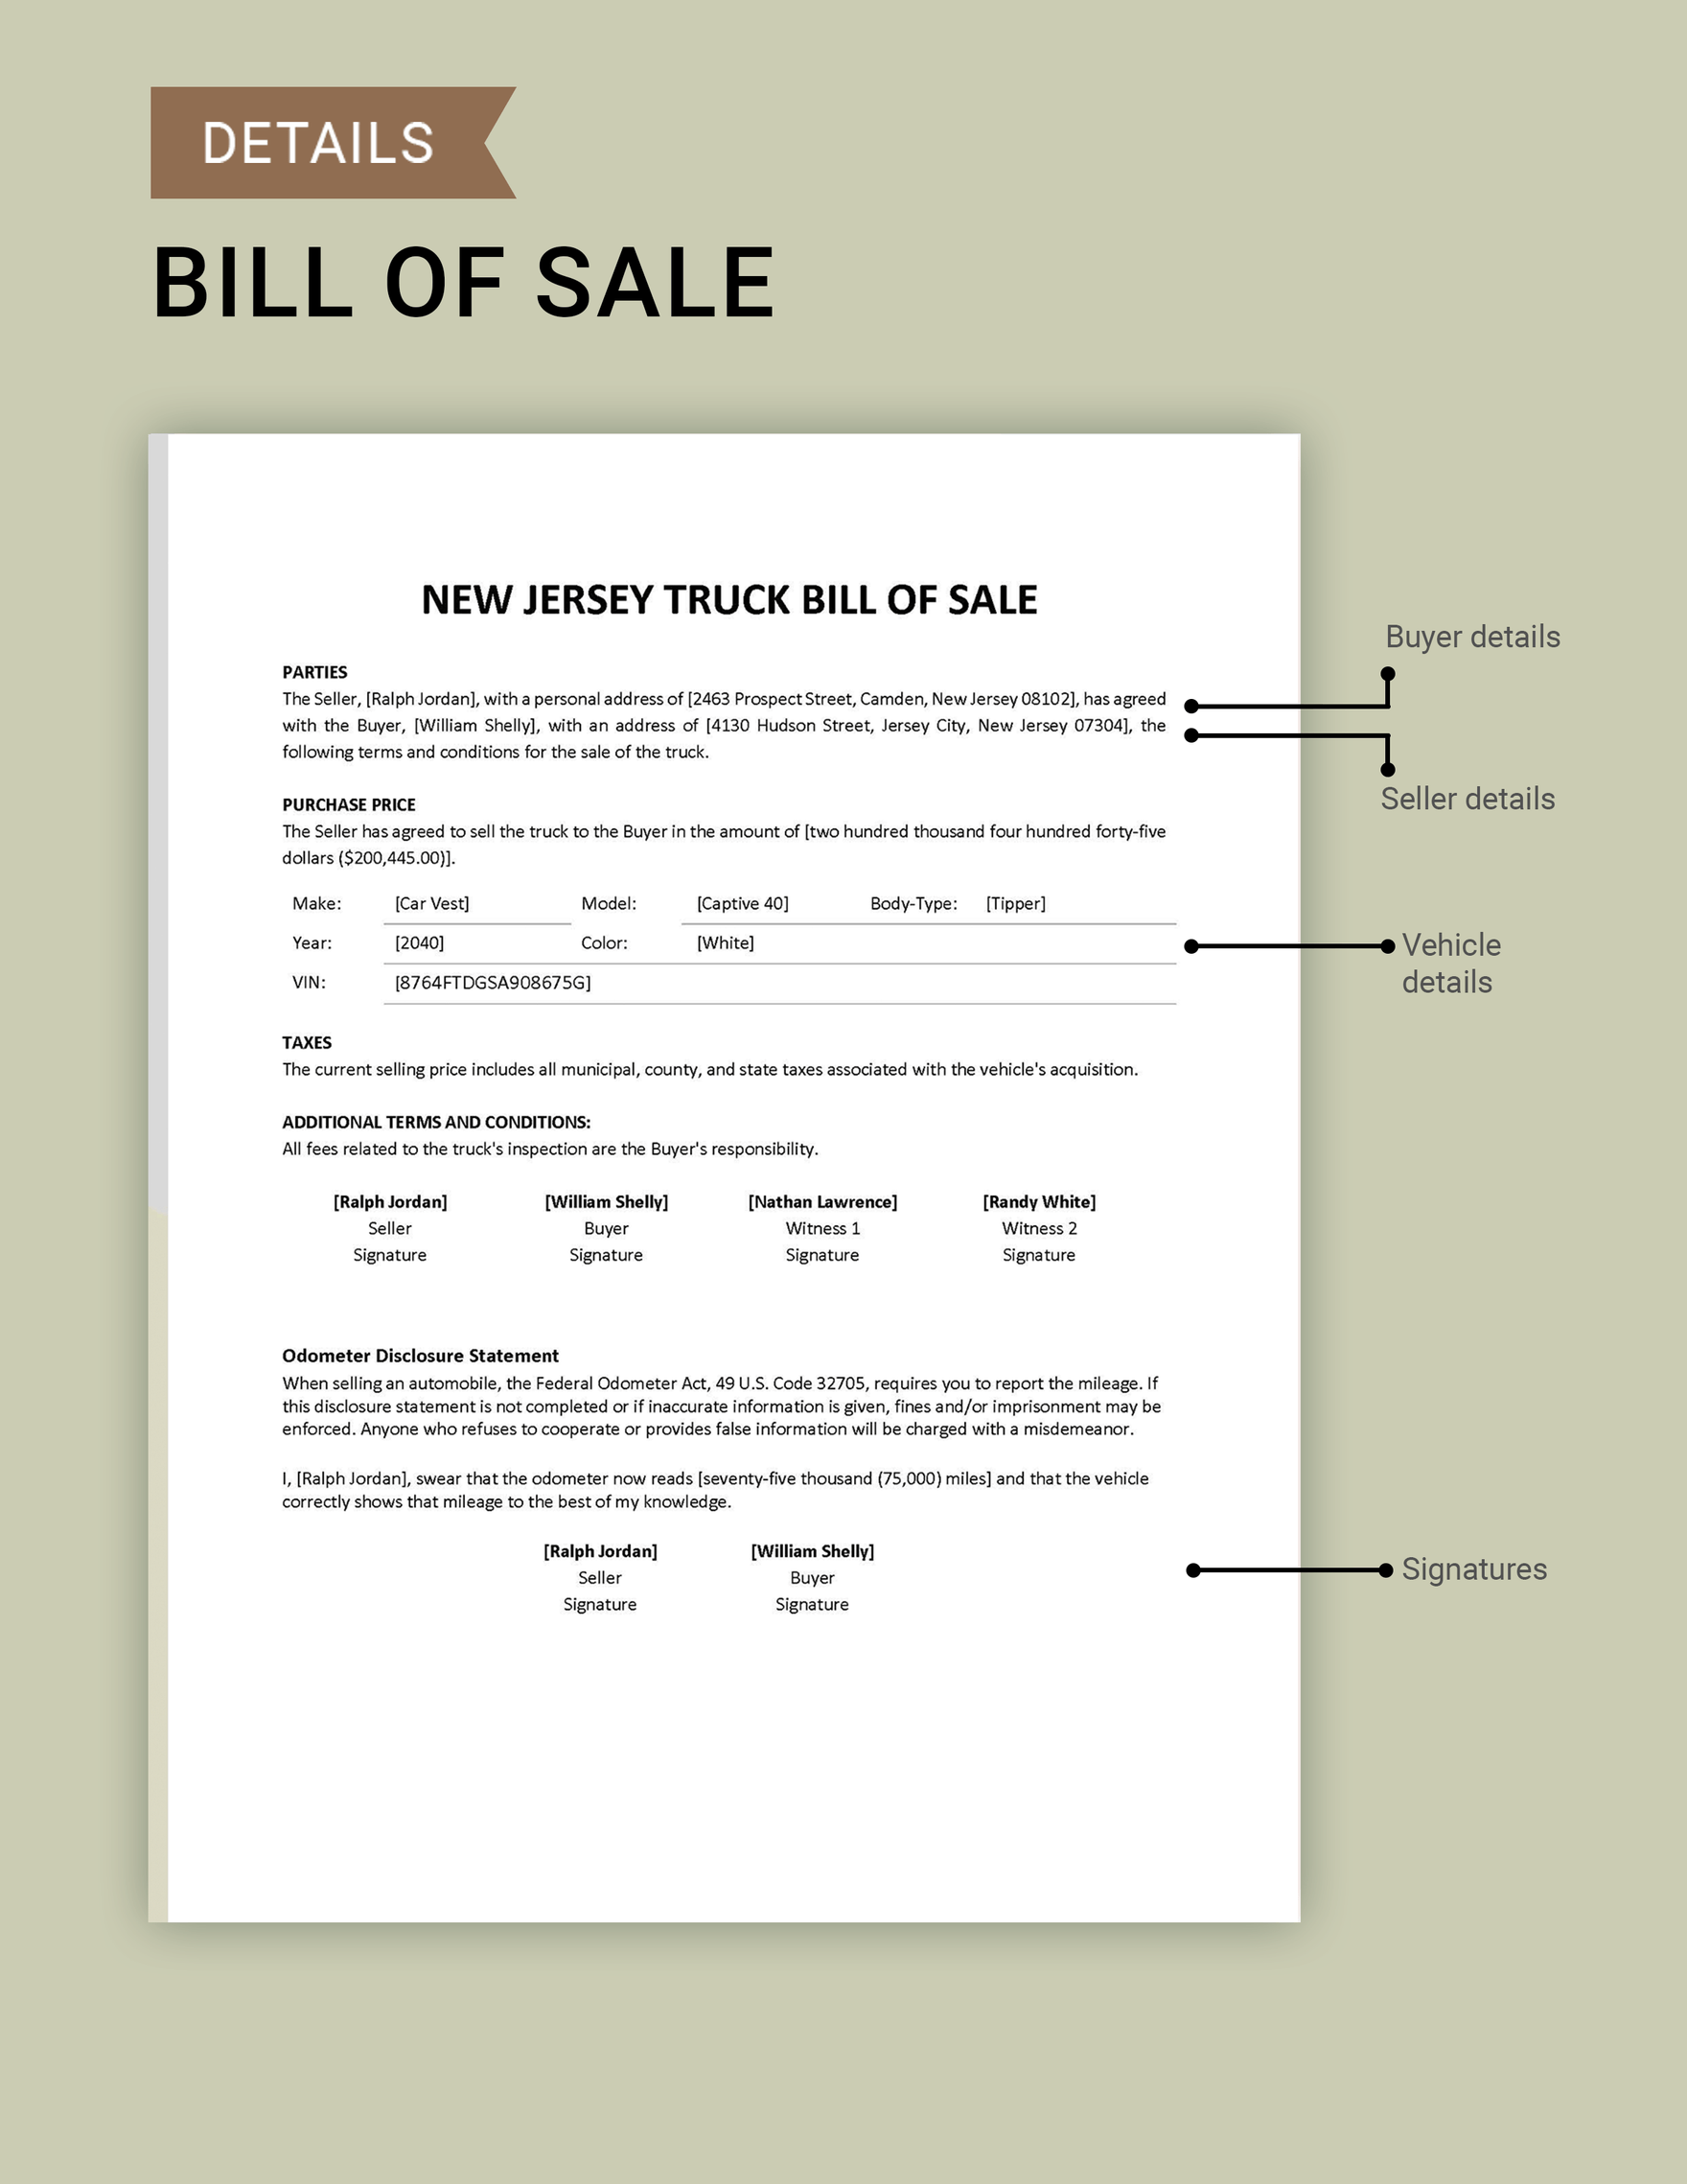 New Jersey Truck Bill of Sale Template